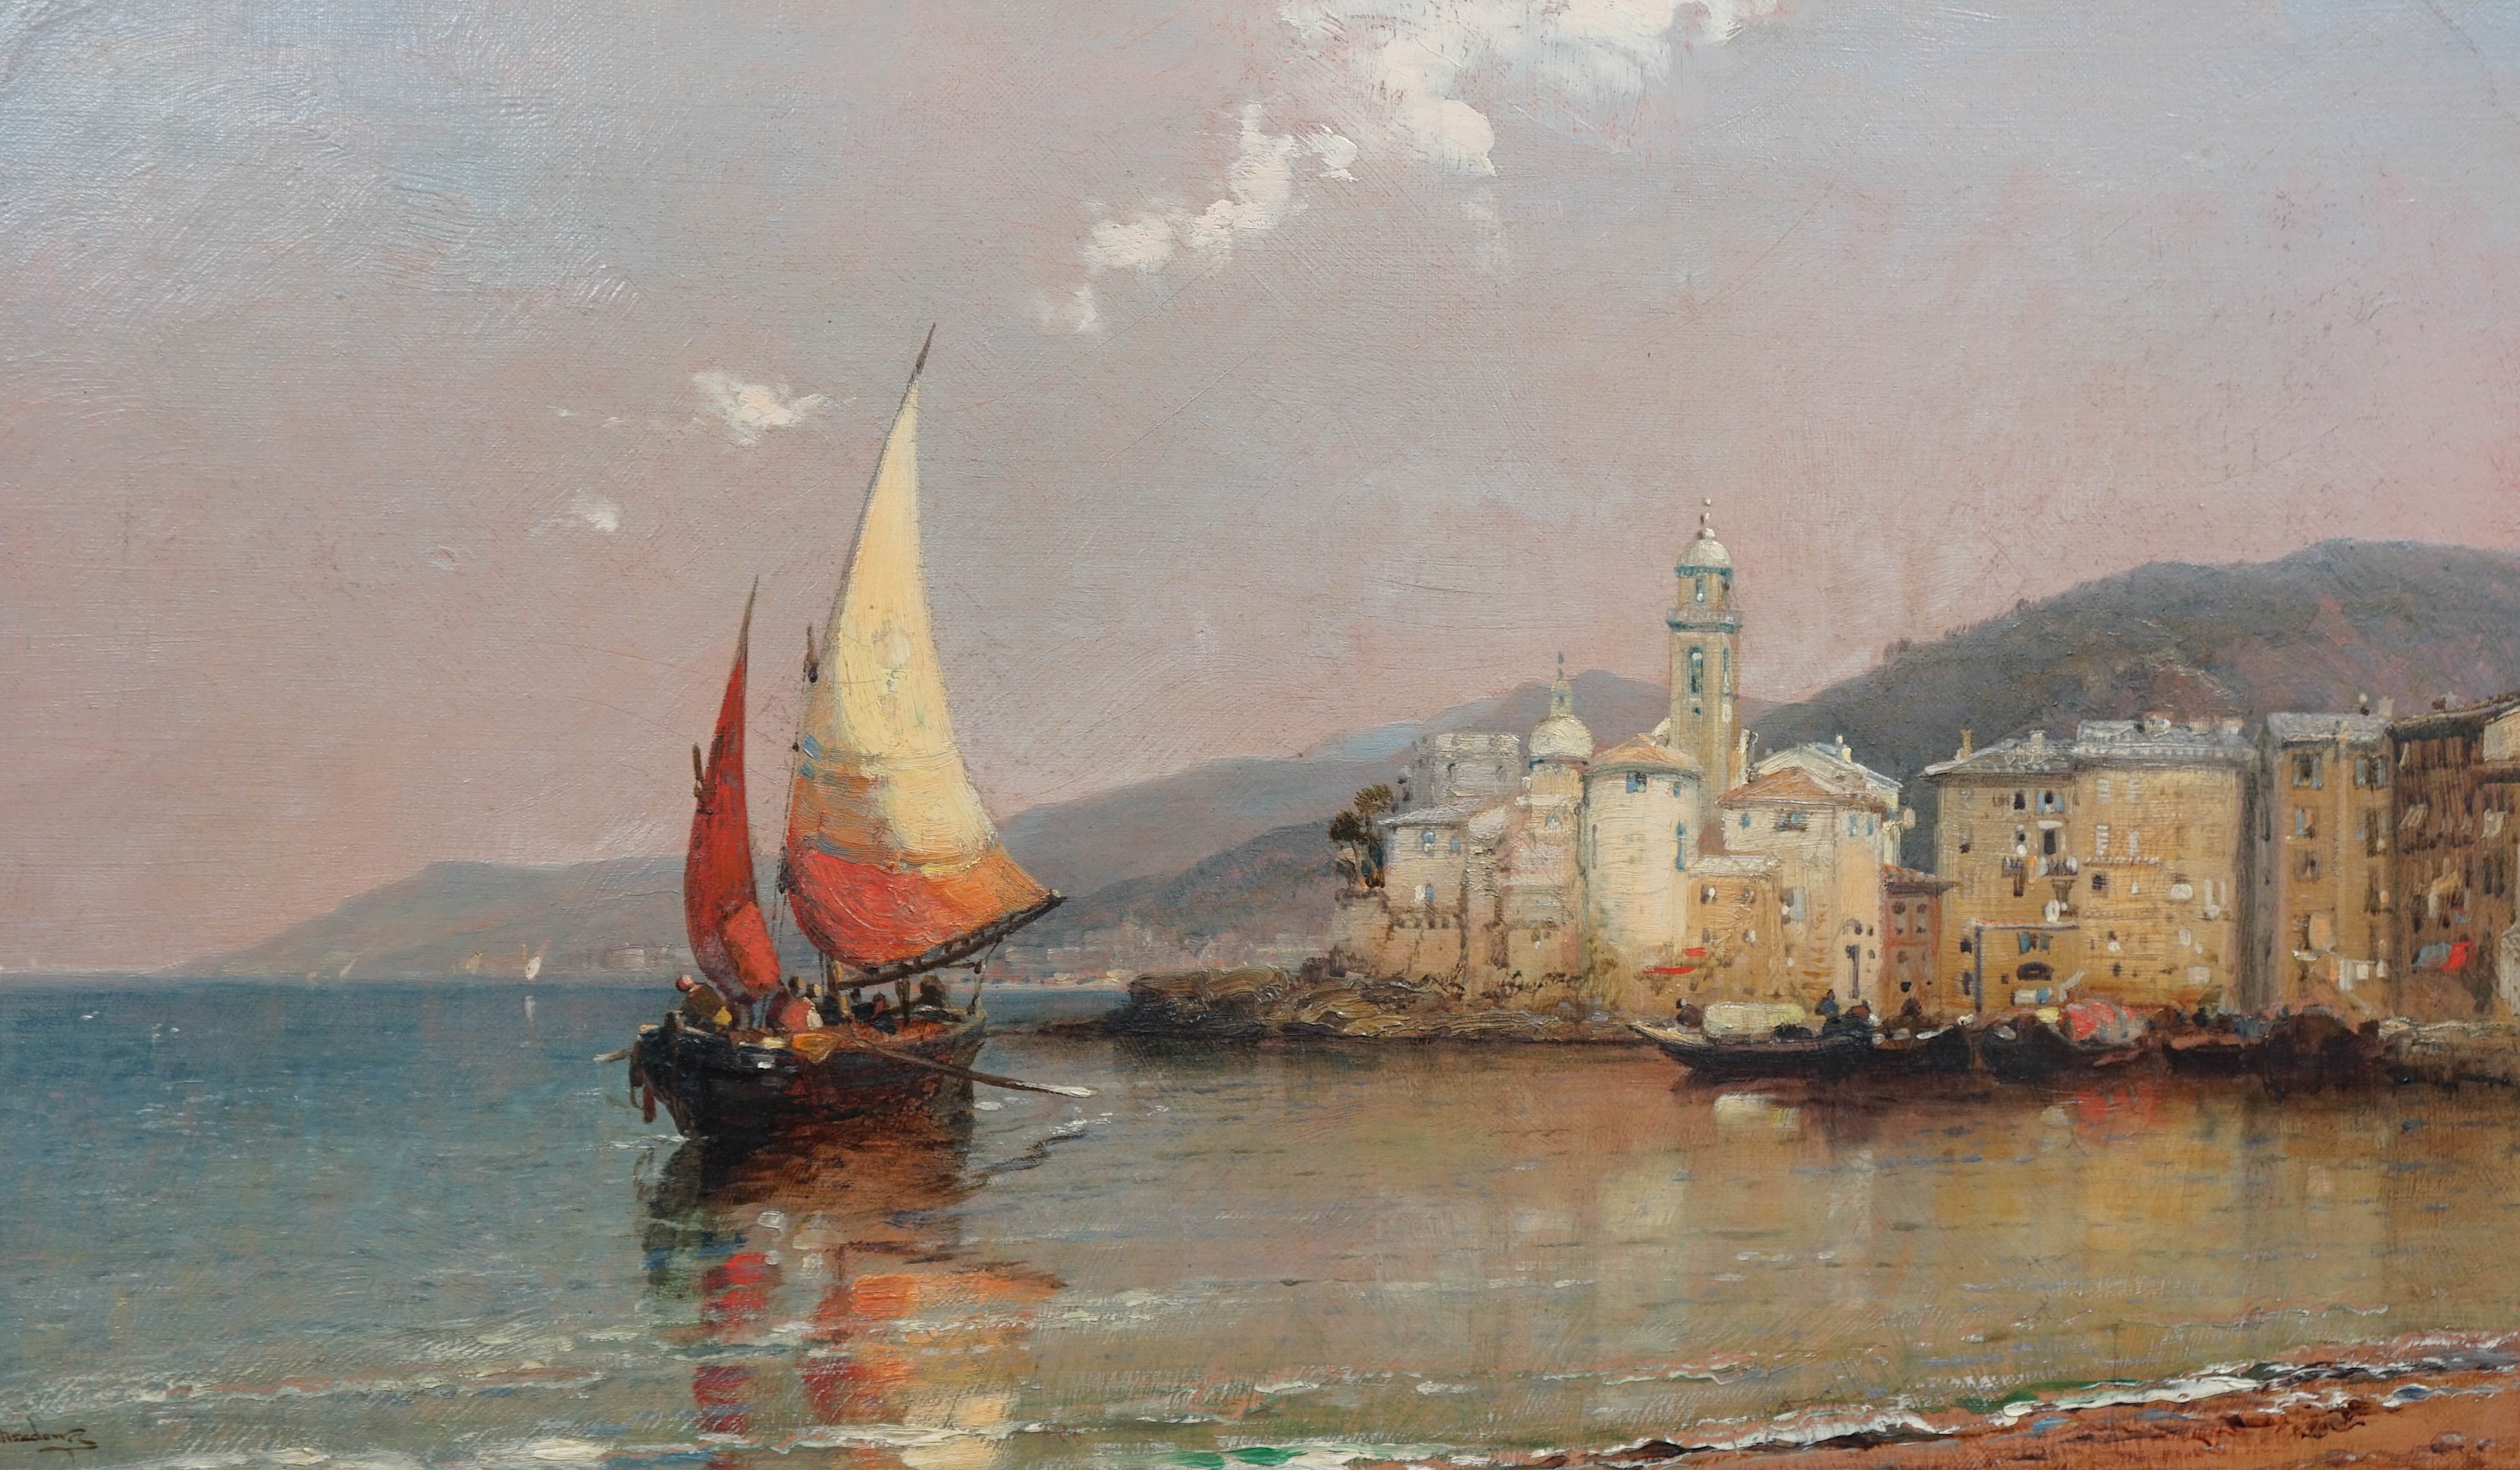 Arthur Joseph Meadows (English, 1843-1907), 'Camagh in the Riviera, 1901', oil on canvas, 29.5 x 49cm